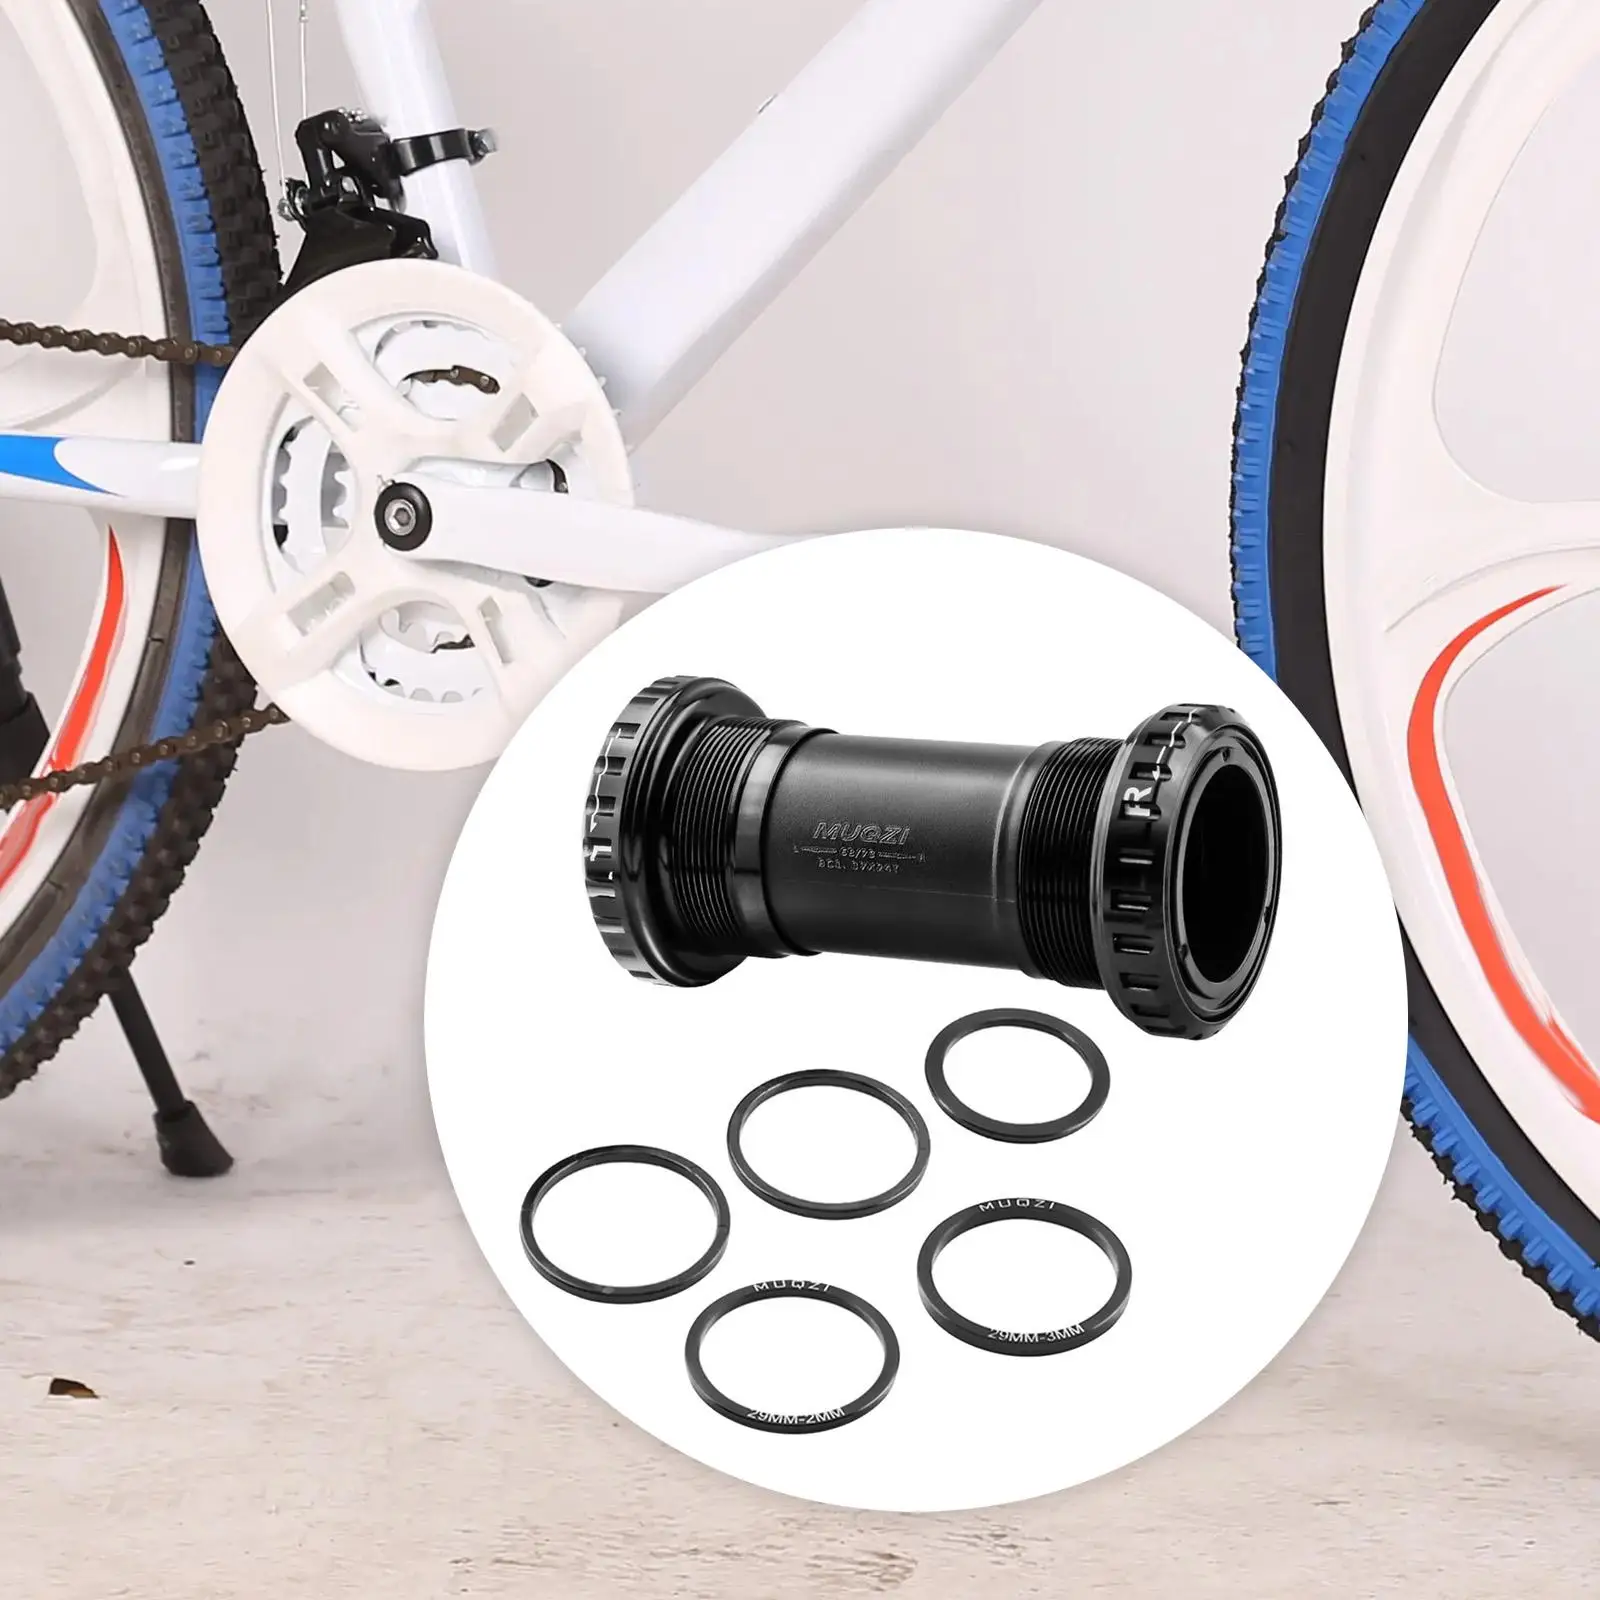 Bike Bottom Bracket Crankset Repair Component Parts Durable Replacement